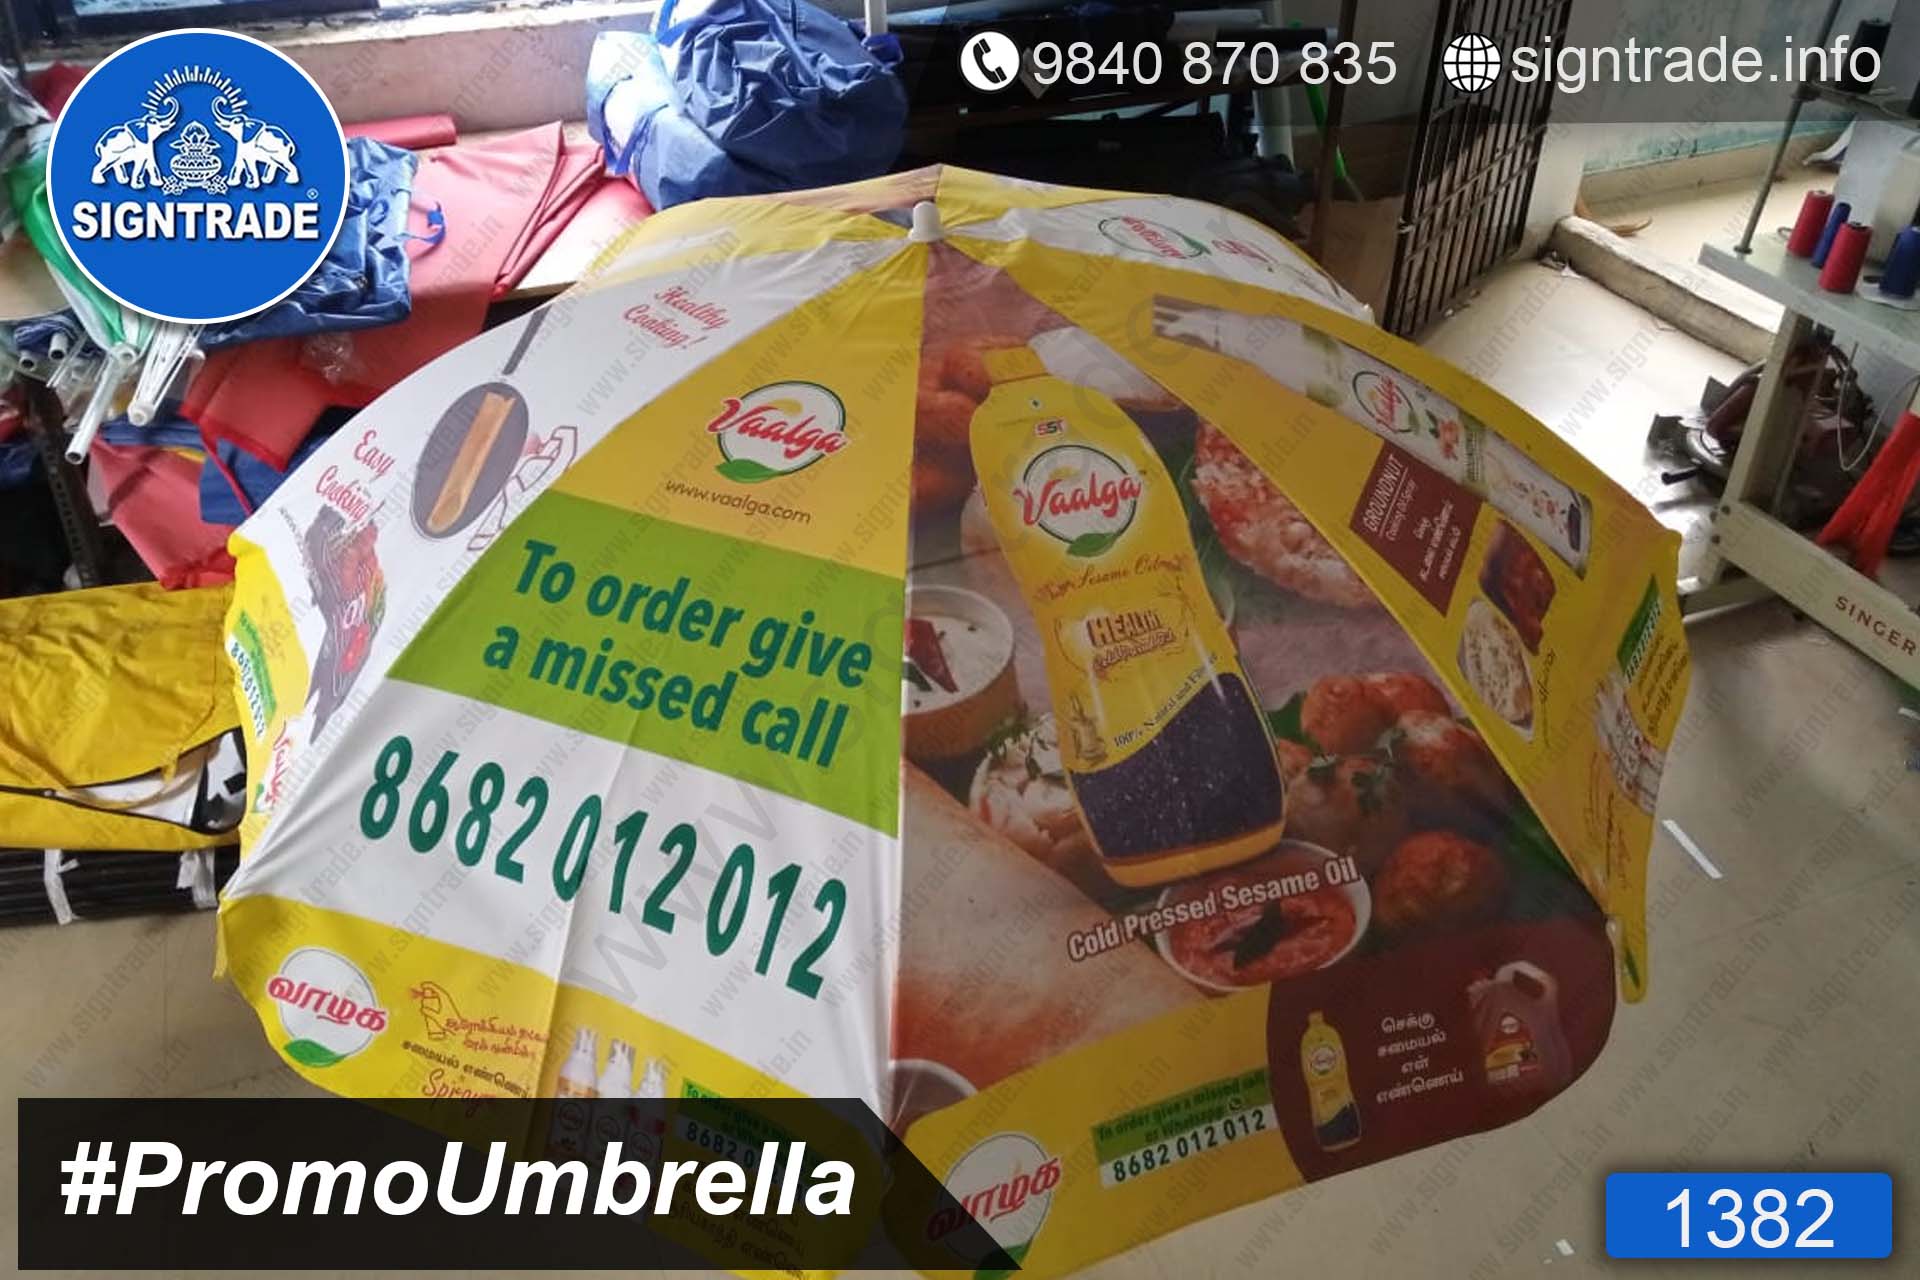 Vaalga Cooking Oil Spray - 1382, Promotional Umbrella, Umbrella, Promo Umbrella, Advertising Umbrella, Big Umbrella, Large Umbrella, Printed Umbrella